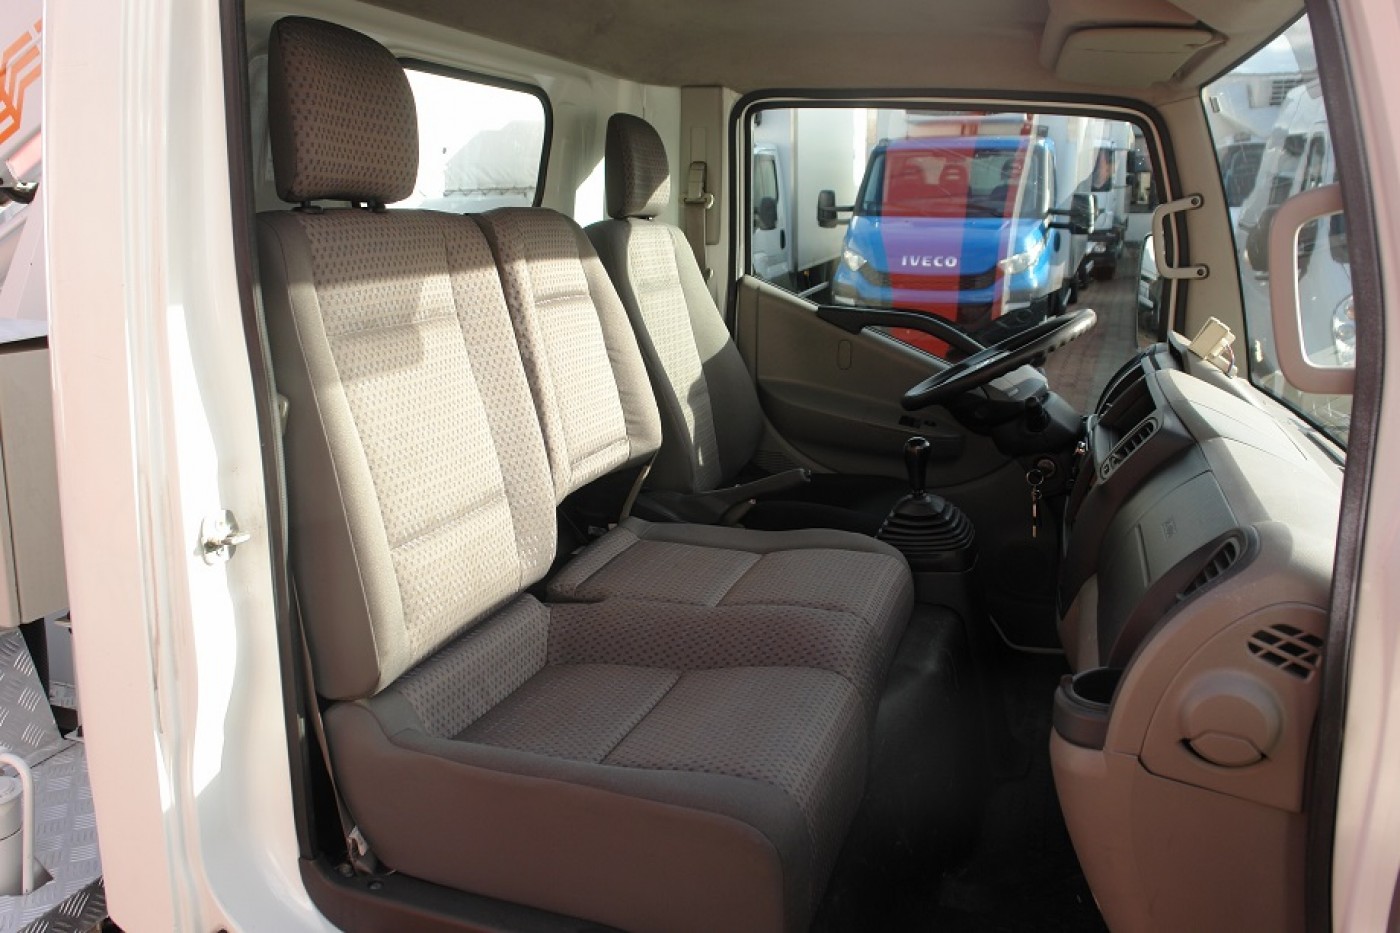 Nissan Cabstar 35,11 Platforma e punës ajrore Comilev 100TVL 10m 120 kg